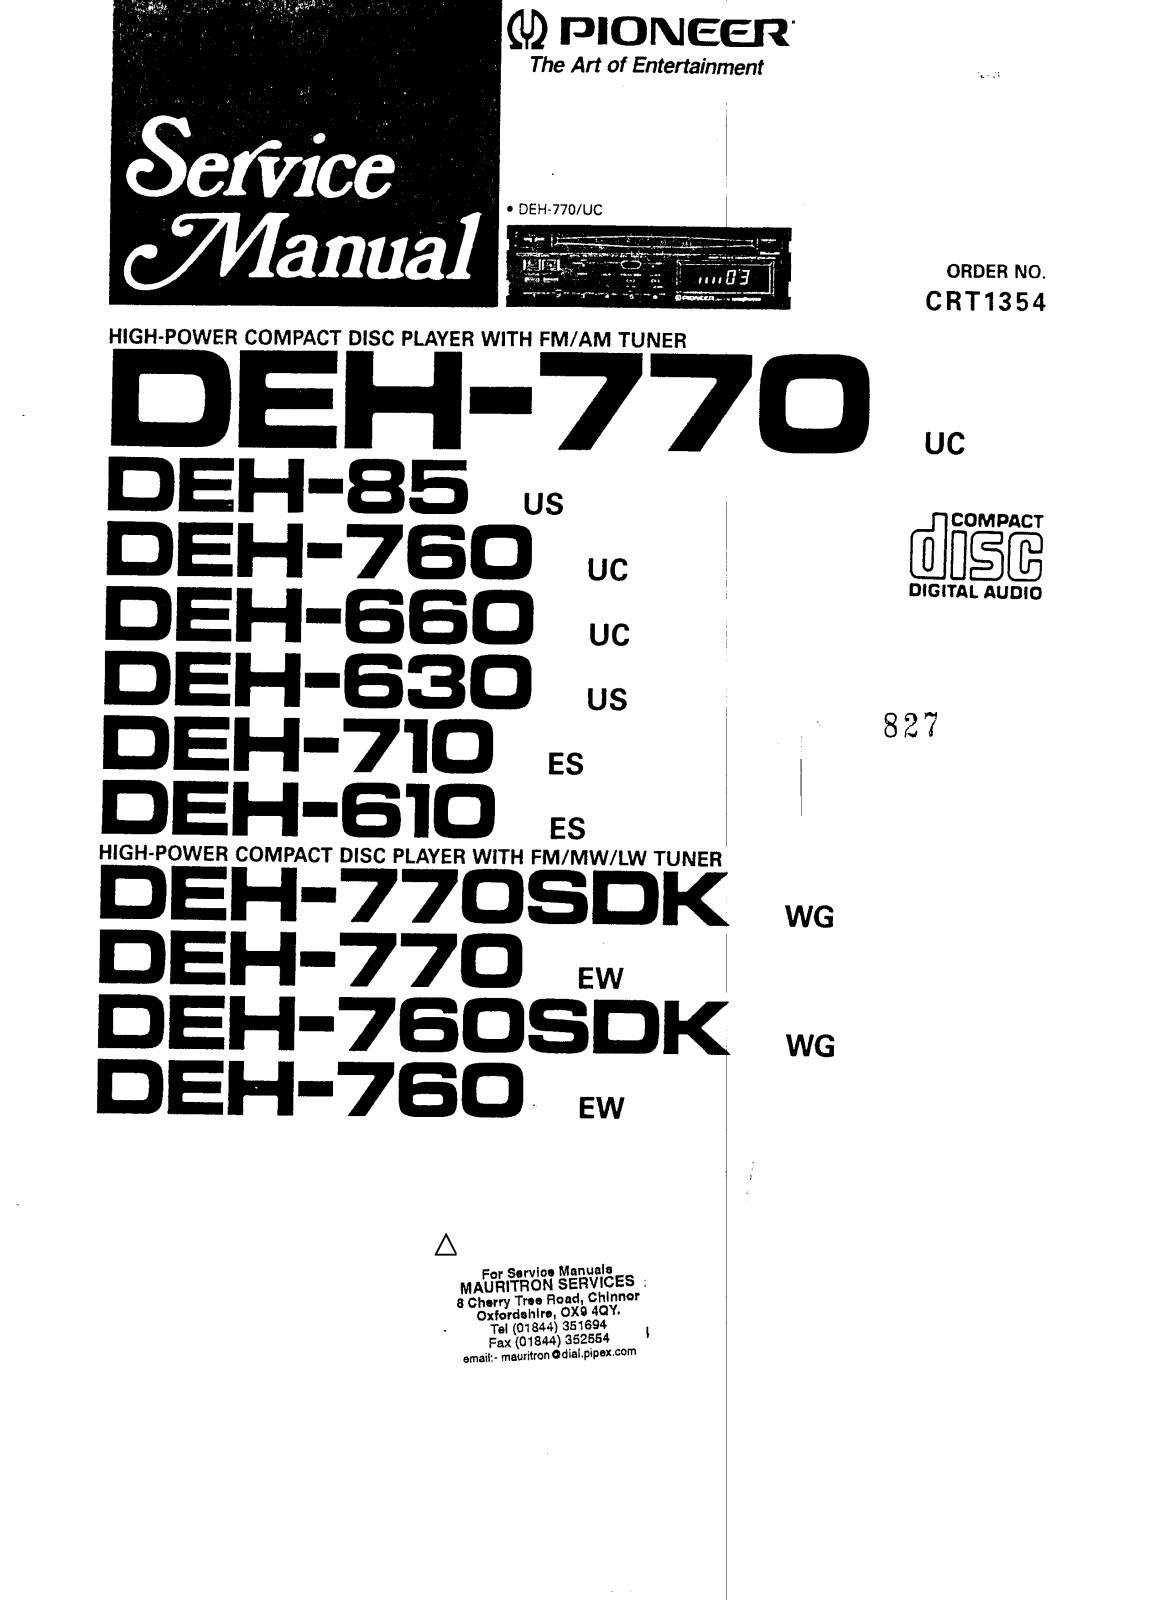 PIONEER DEH-85, DEH-630, DEH-710, DEH-610, DEH-770 Service Manual